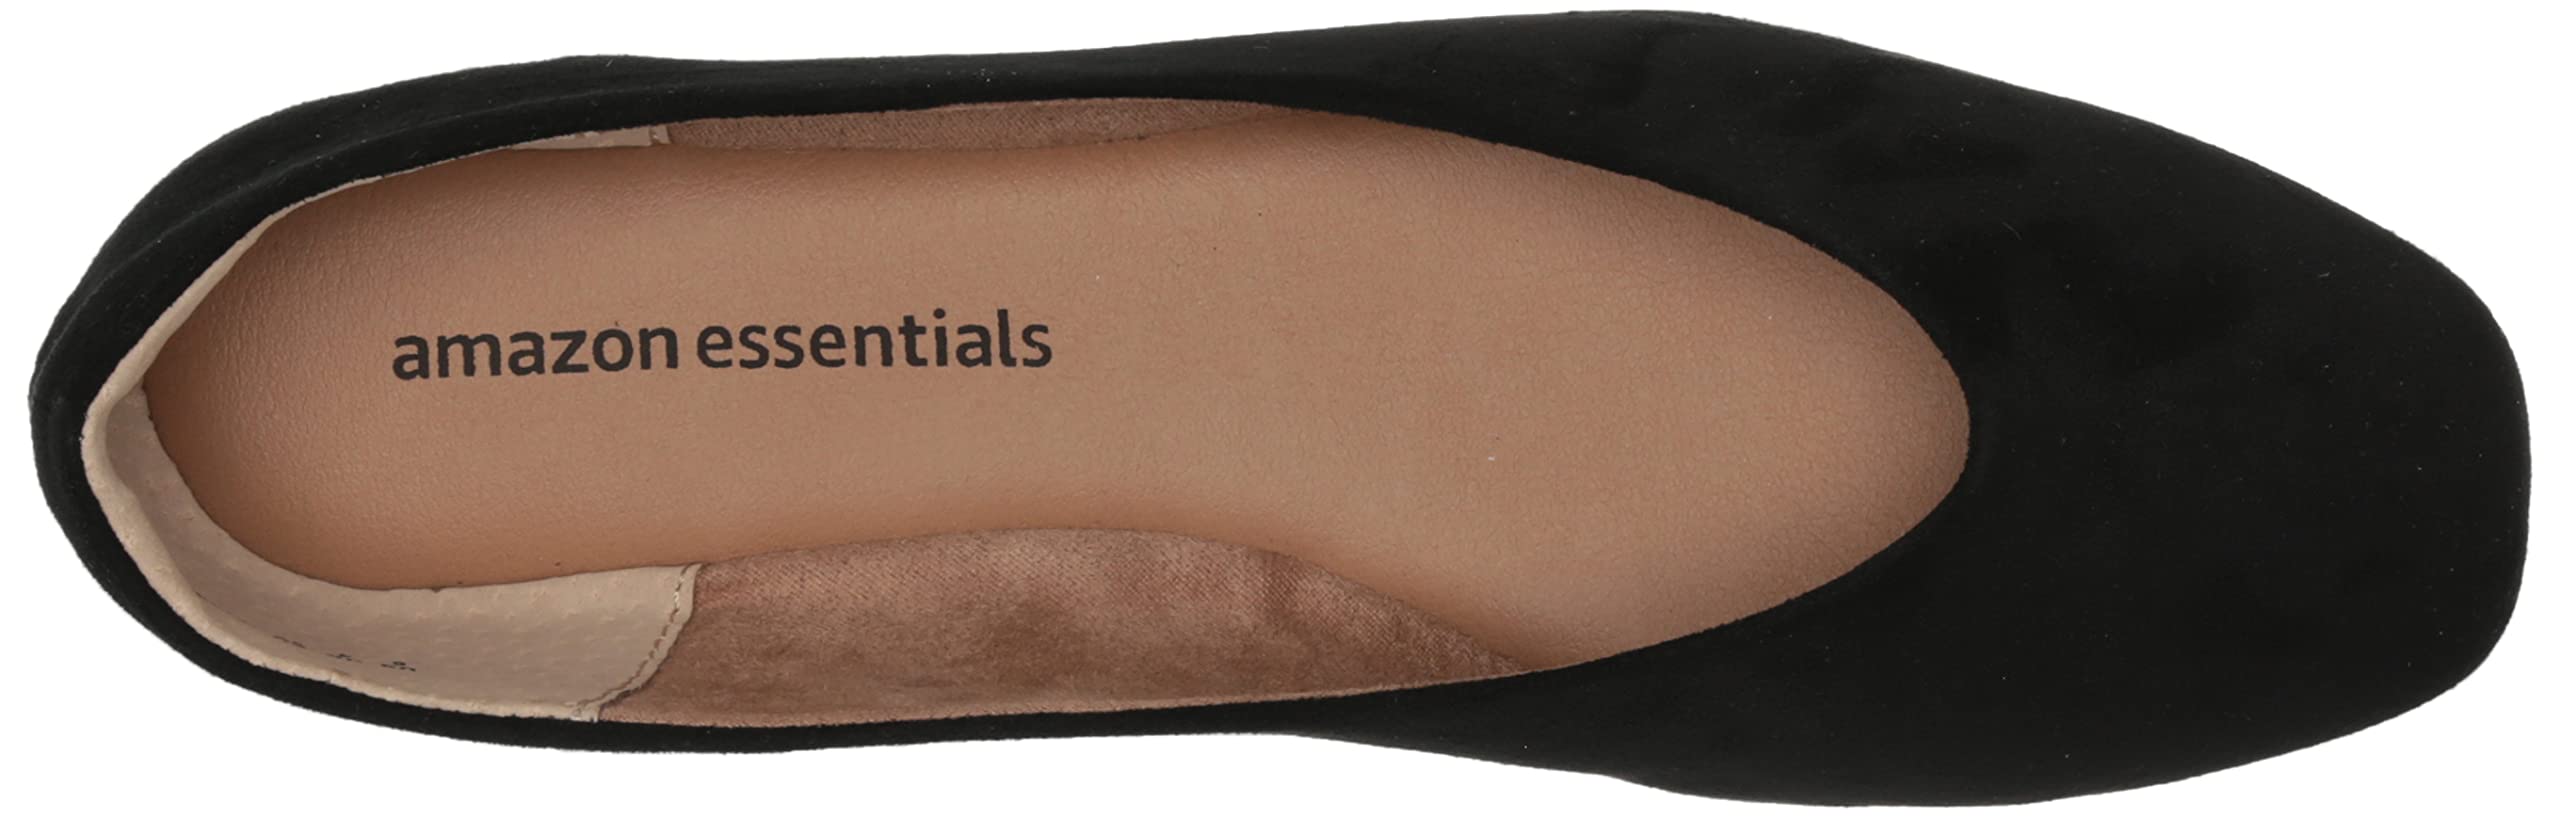 Amazon Essentials Women's Square-Toe Ballet Flat